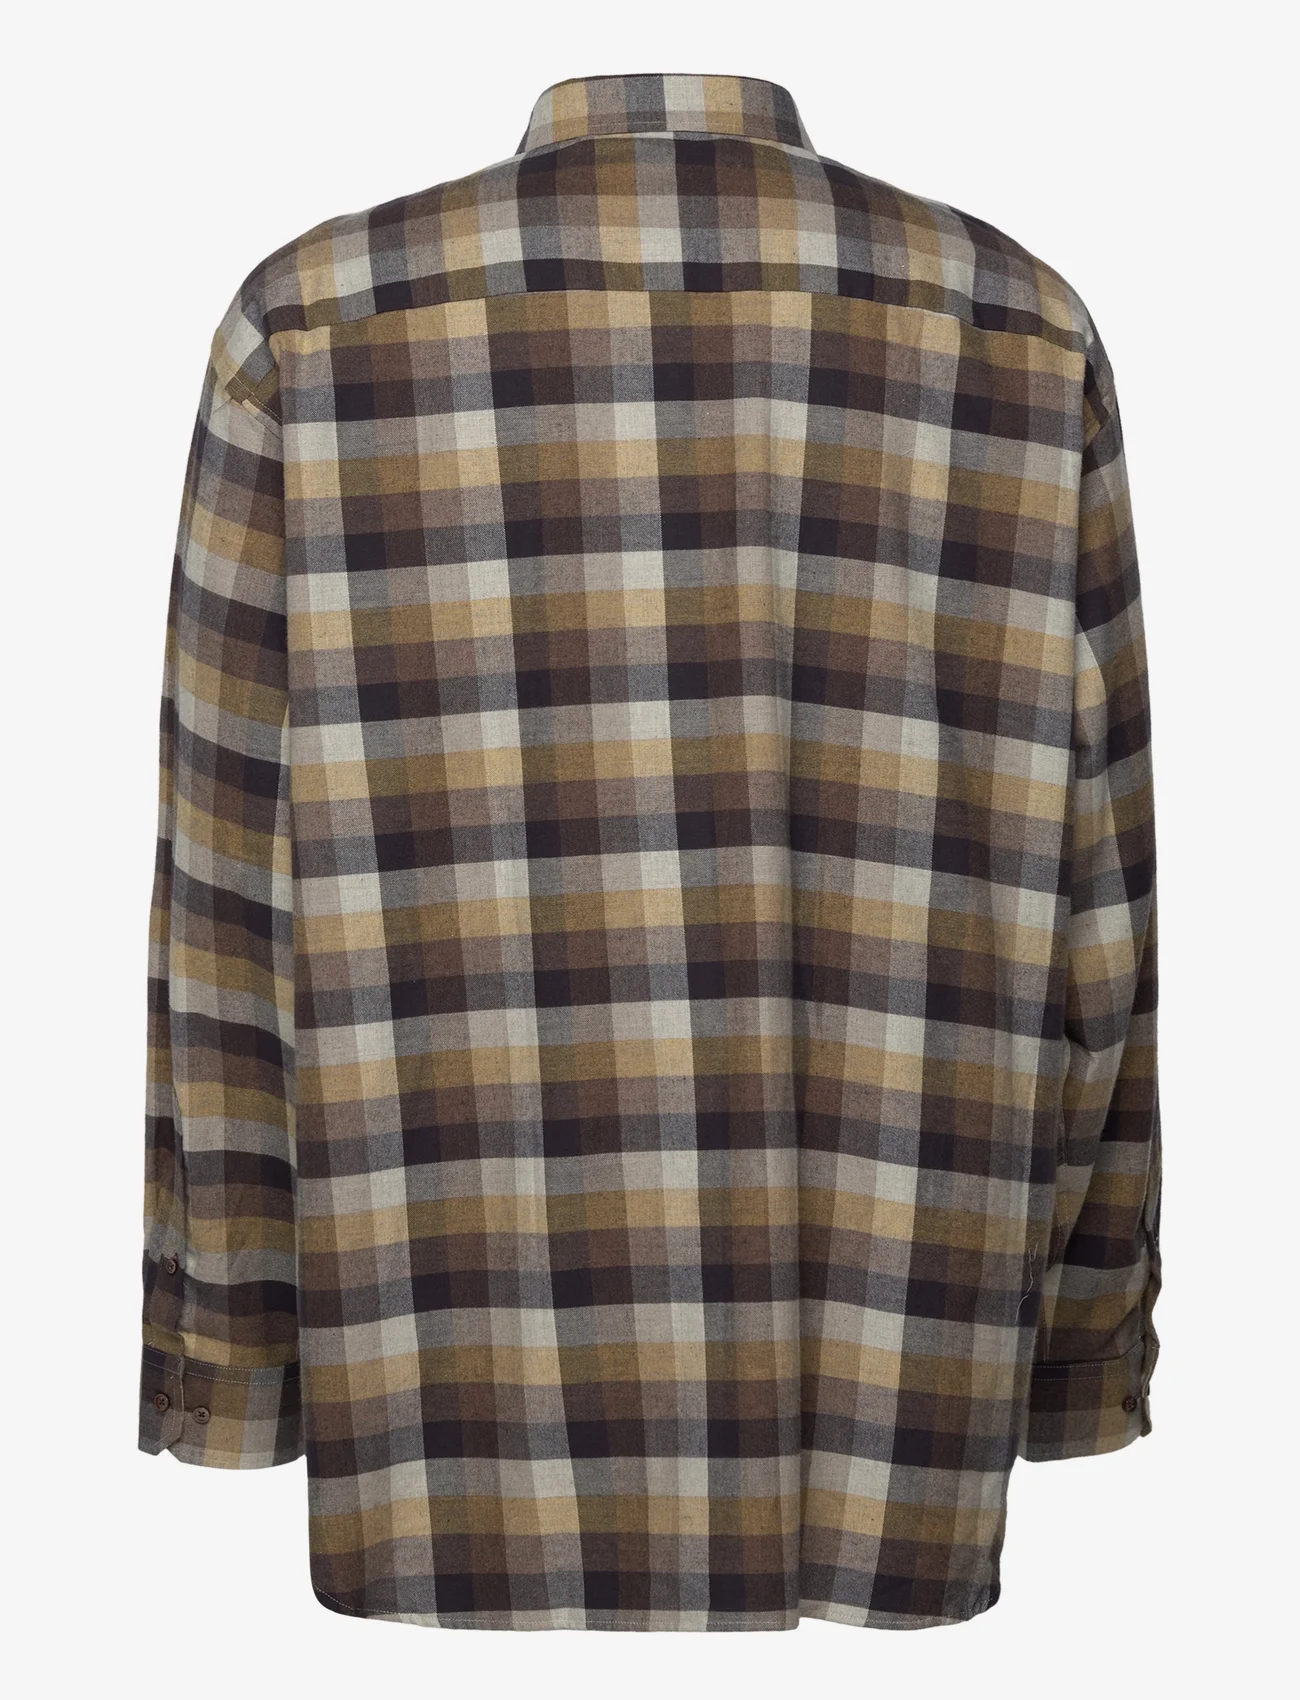 Bosweel Shirts Est. 1937 - Regular fit Mens shirt - checkered shirts - brown - 1